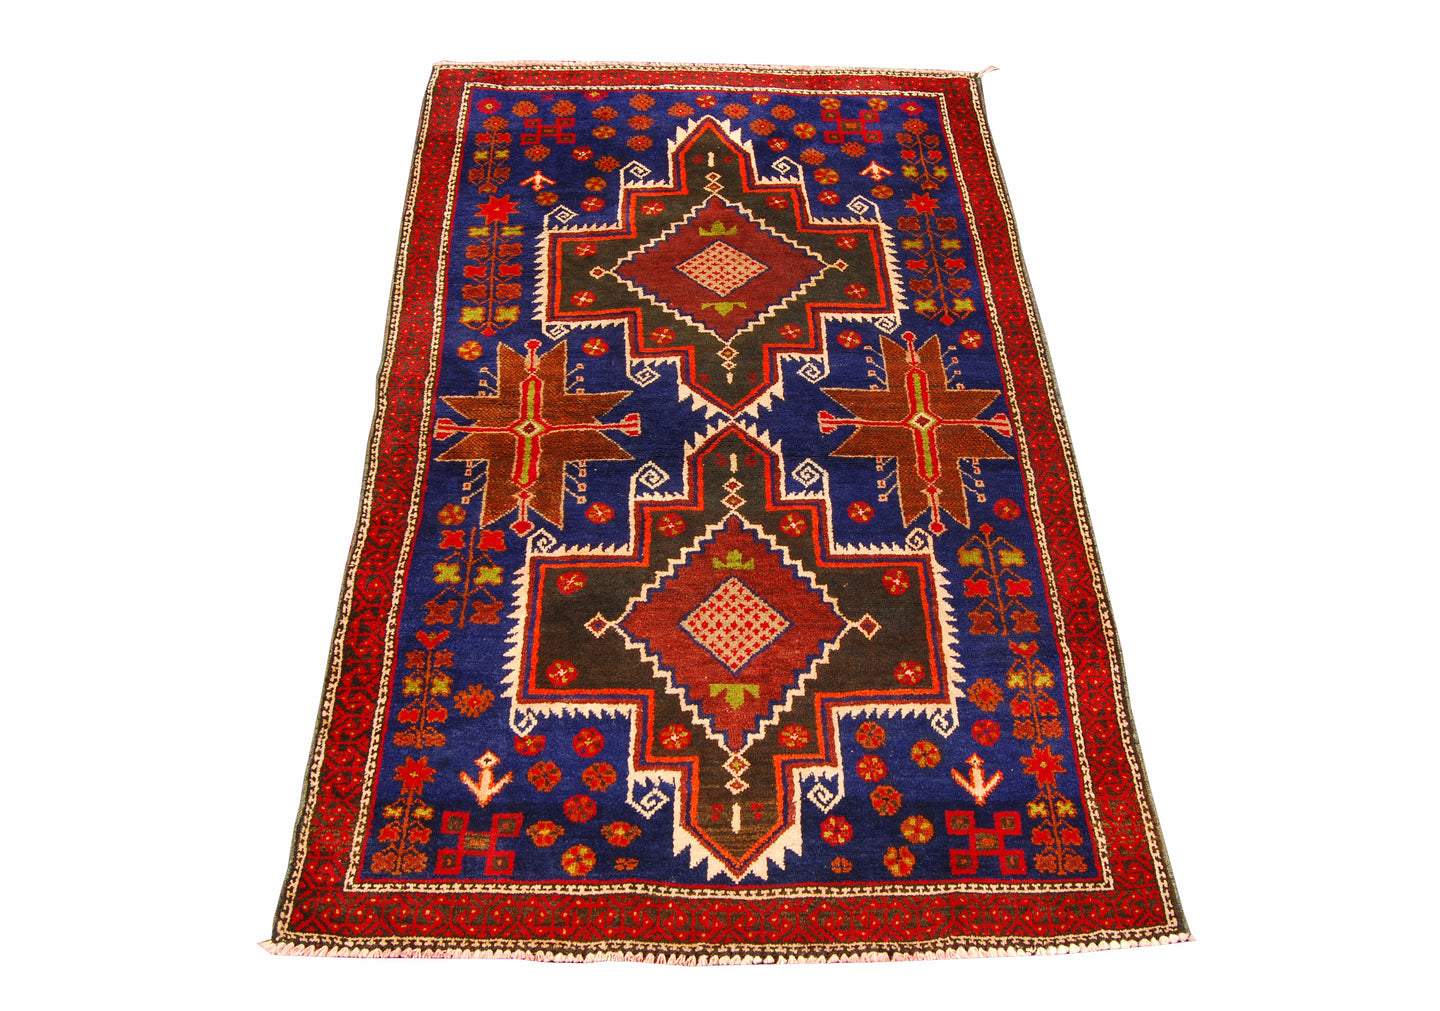 Genuine, Original Pure Wool Rug Rustic Handmad Carpet CM 142x85